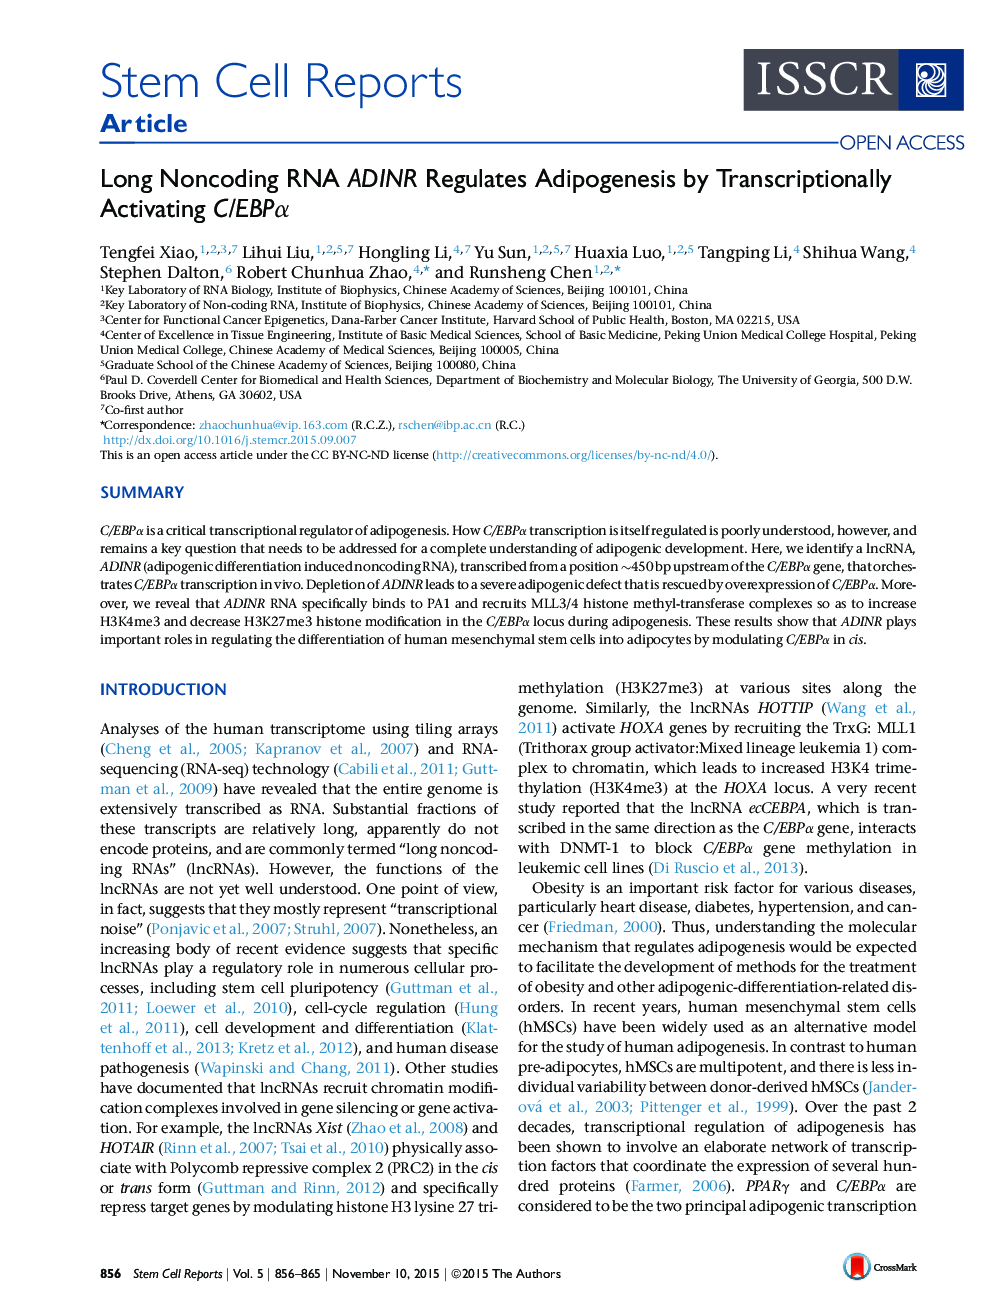 Long Noncoding RNA ADINR Regulates Adipogenesis by Transcriptionally Activating C/EBPα 